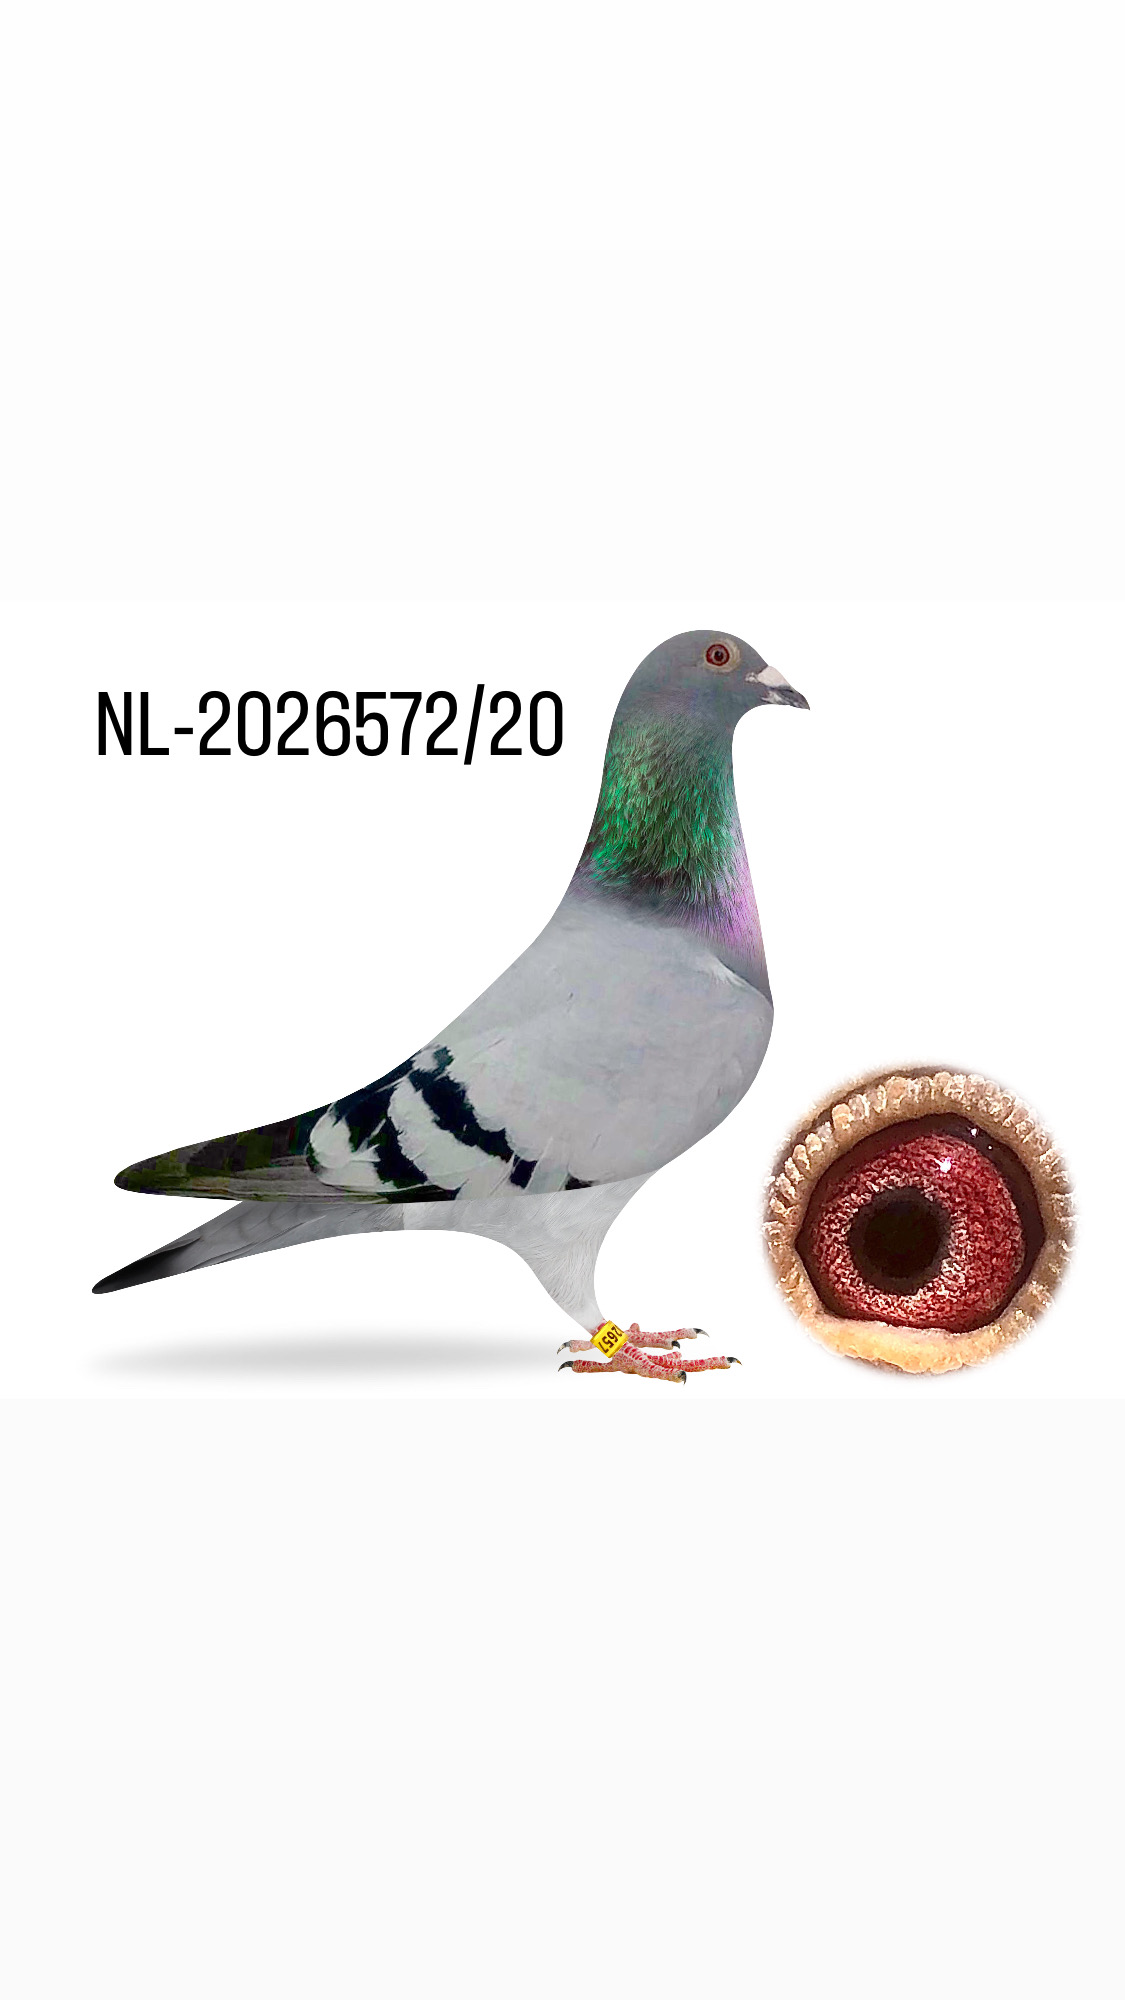 NL-2026572/20 - HEMBRA